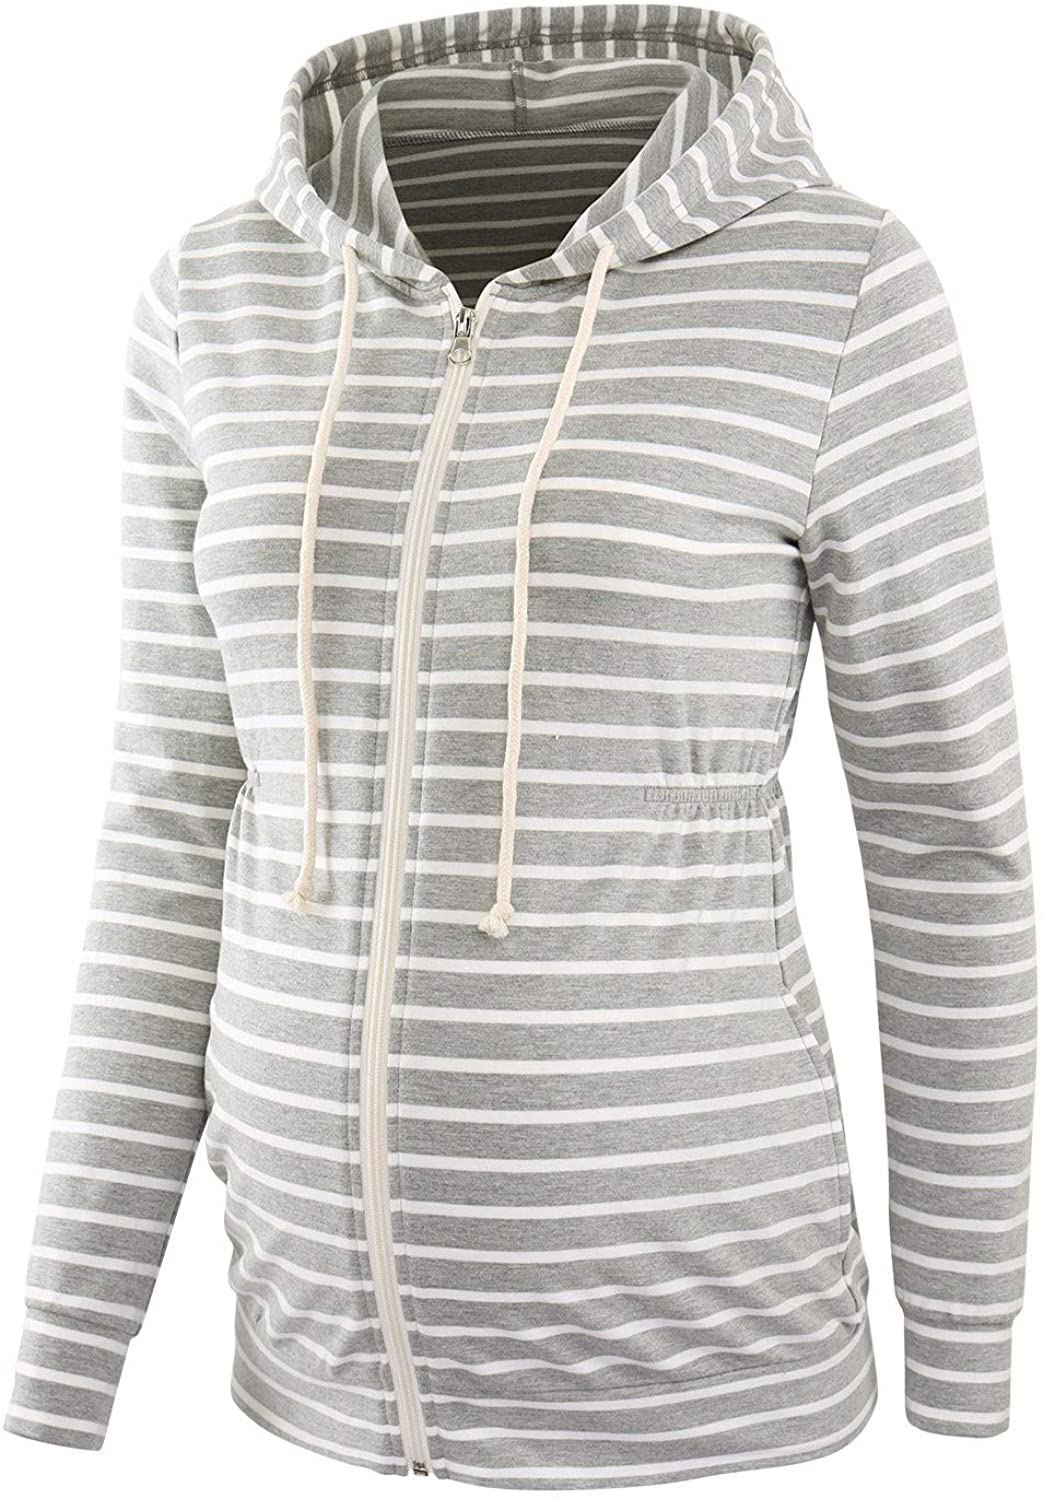 BBHoping Maternity Hoodie Long Sleeve Zip Up Sweatshirts for Women 